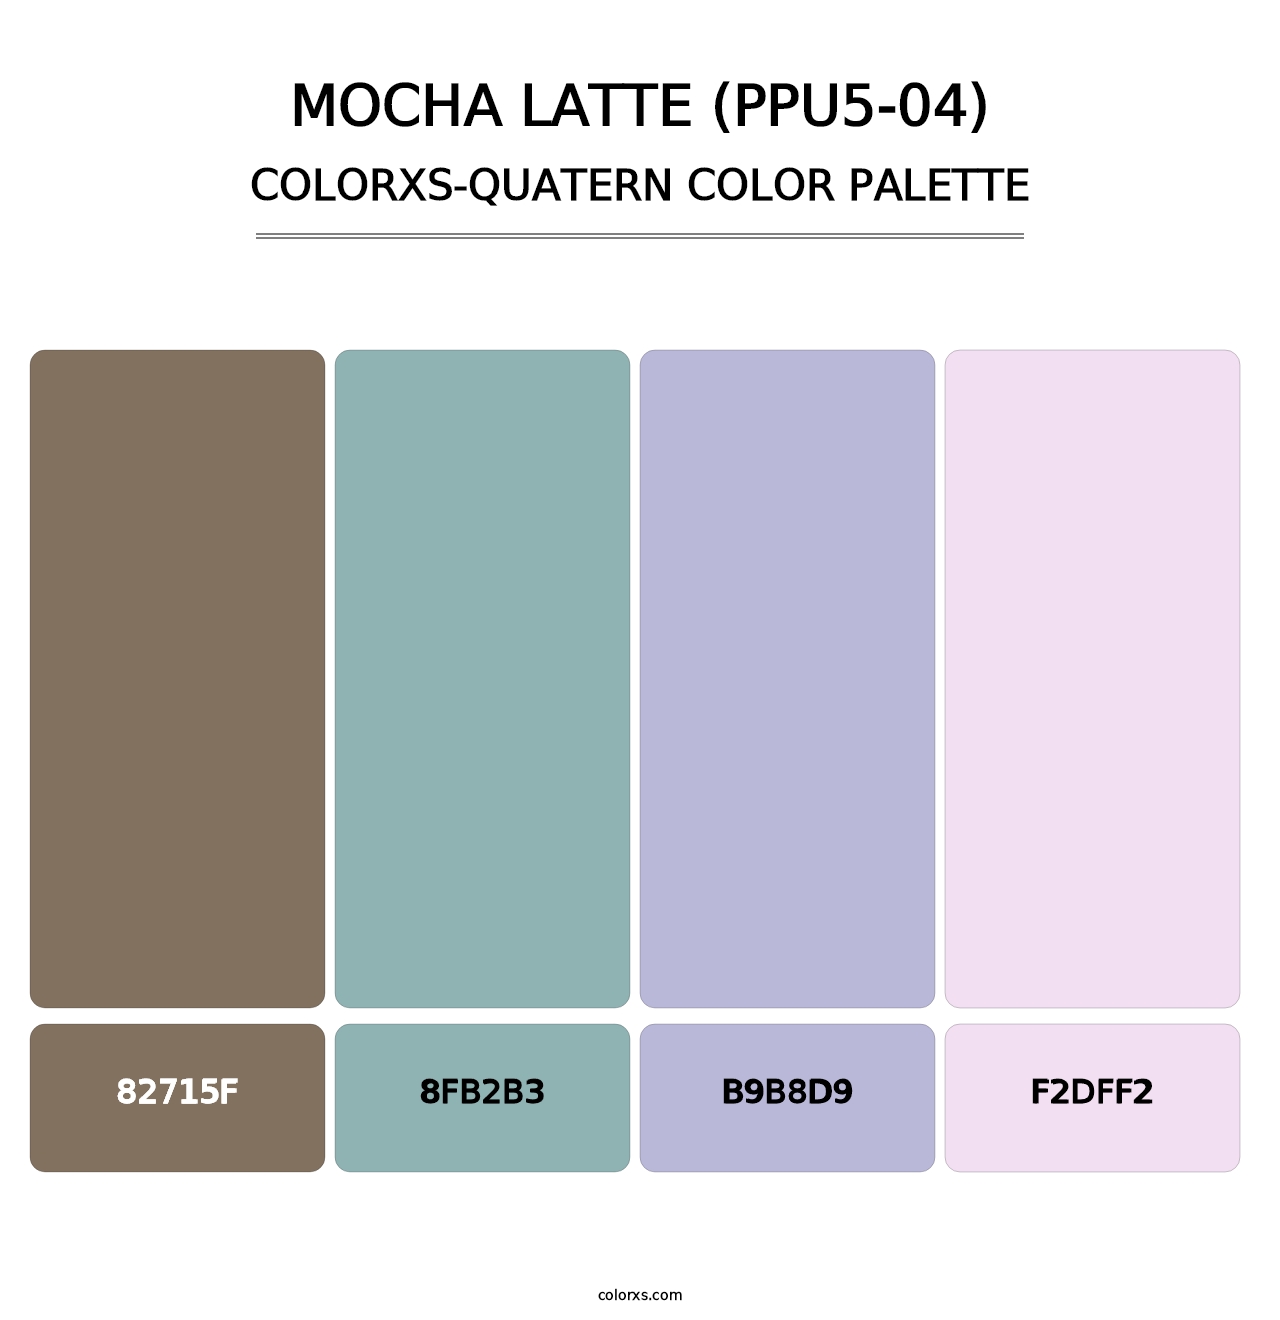 Mocha Latte (PPU5-04) - Colorxs Quatern Palette